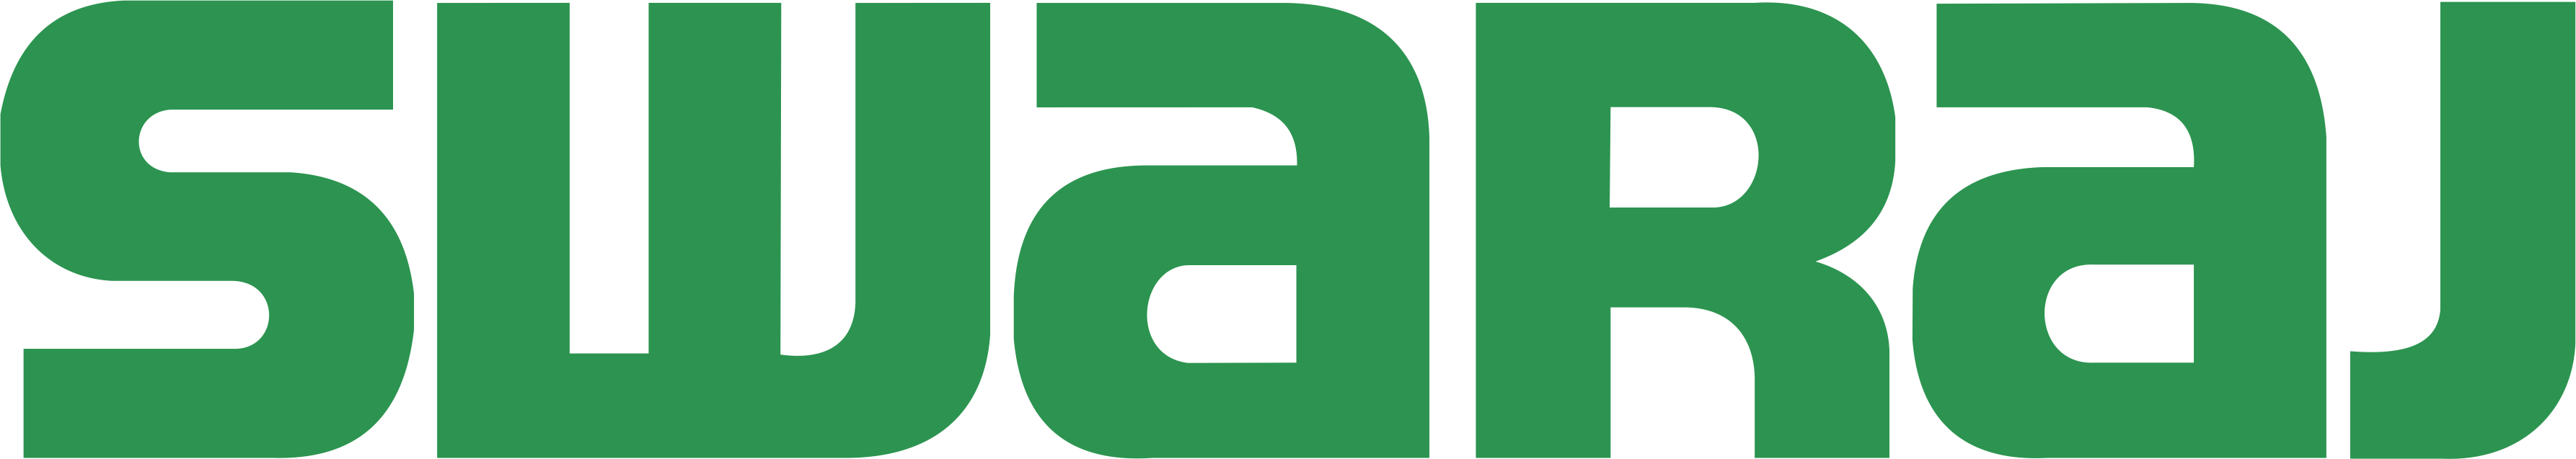 tractor Brand logo